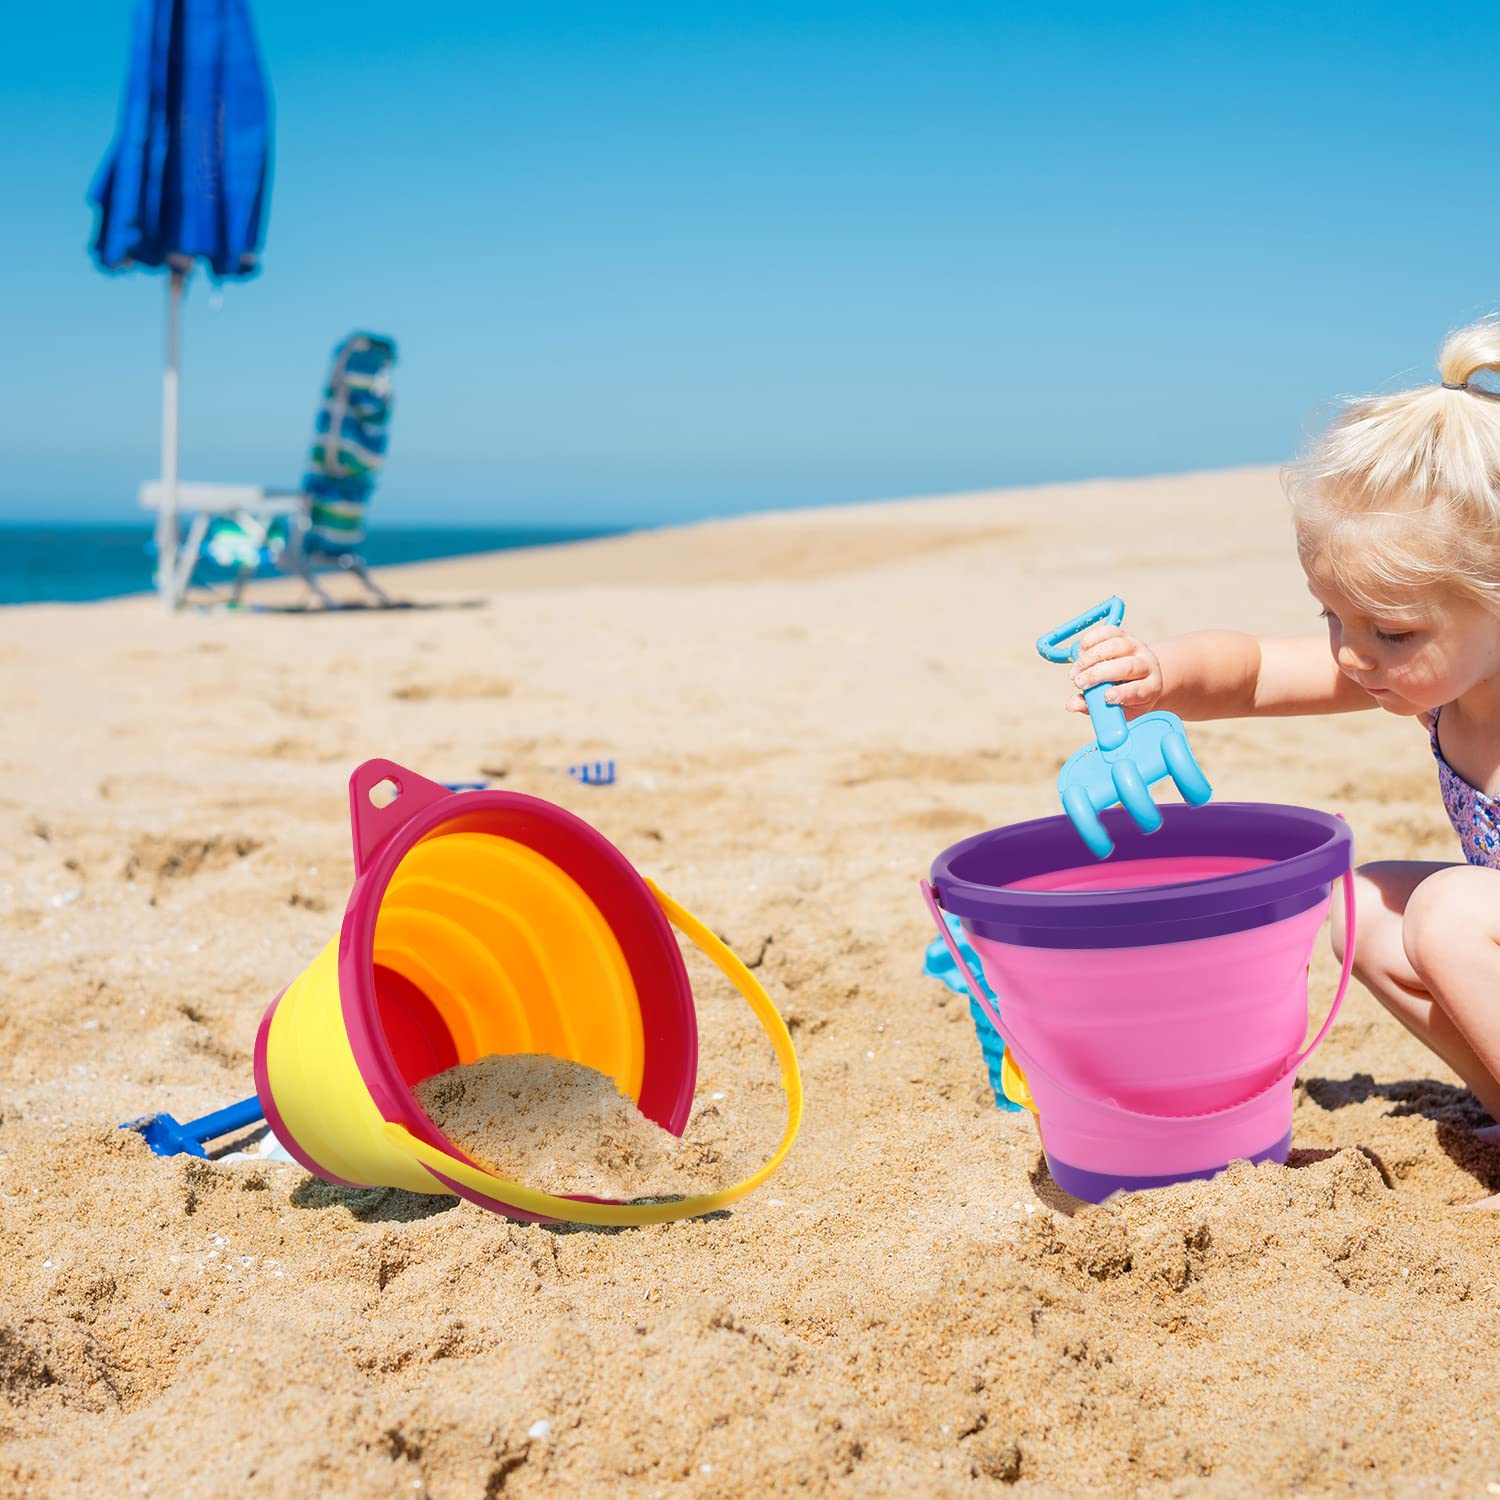 thinkstar 3Pcs Foldable Beach Bucket, Kids Beach Bucket Silicone Fodable Sand Bucket Beach Toys Potable And Space-Saving Beach Bucket…